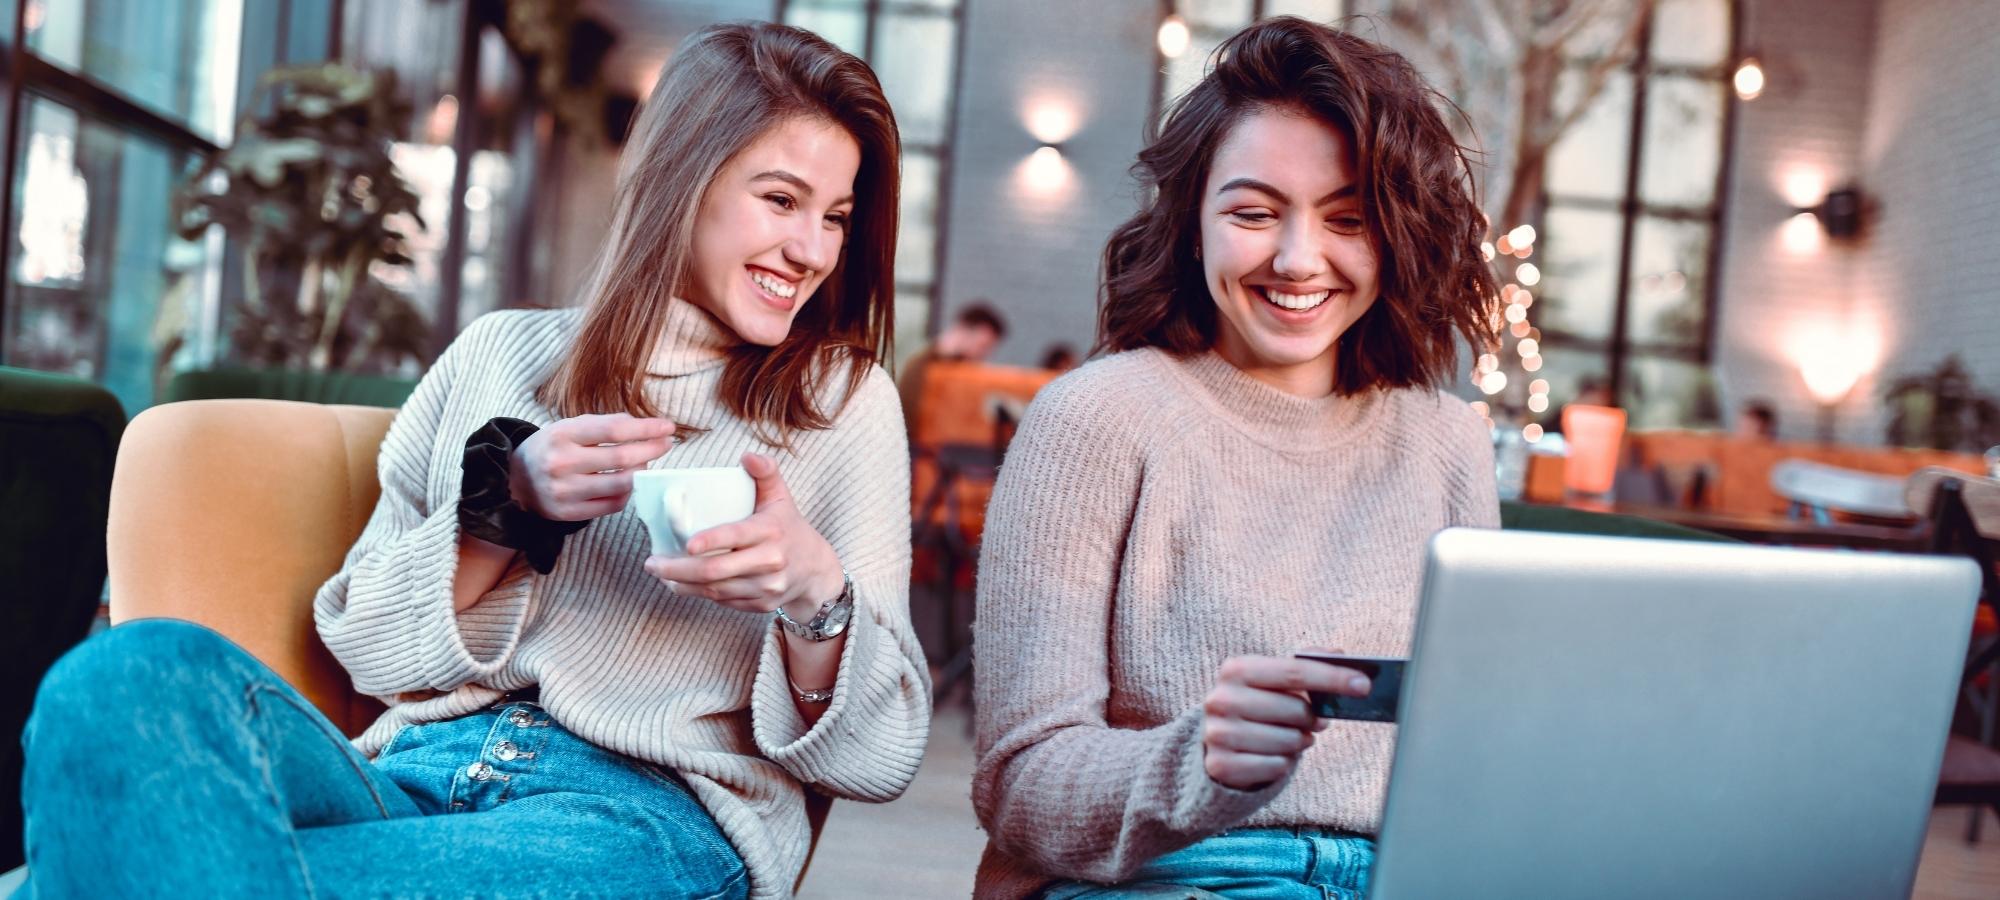 two women online shopping in a coffee shop earning cash back rewards